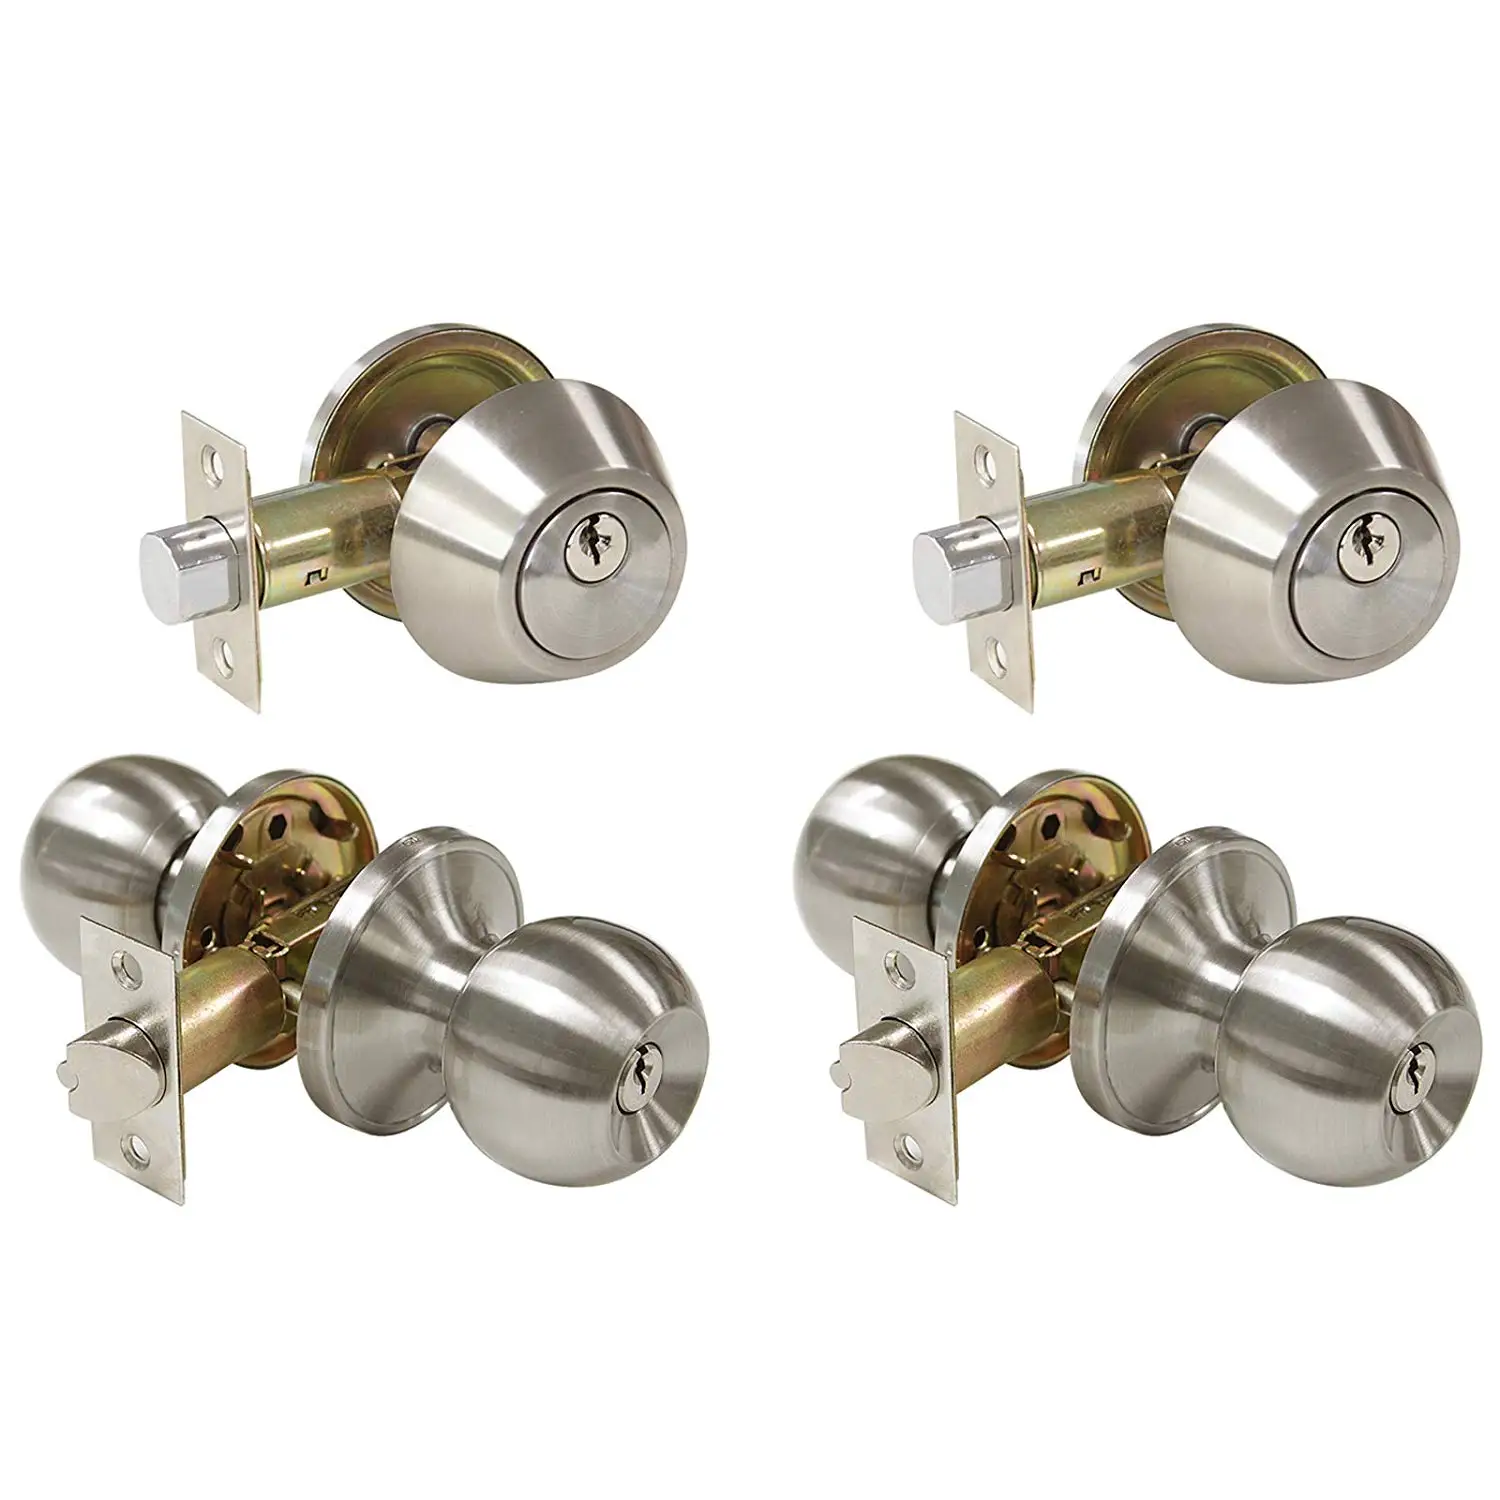 Door Entry Knob Locks Antique Brass 4 Pieces of Nuset Fremont Keyed Alike US5